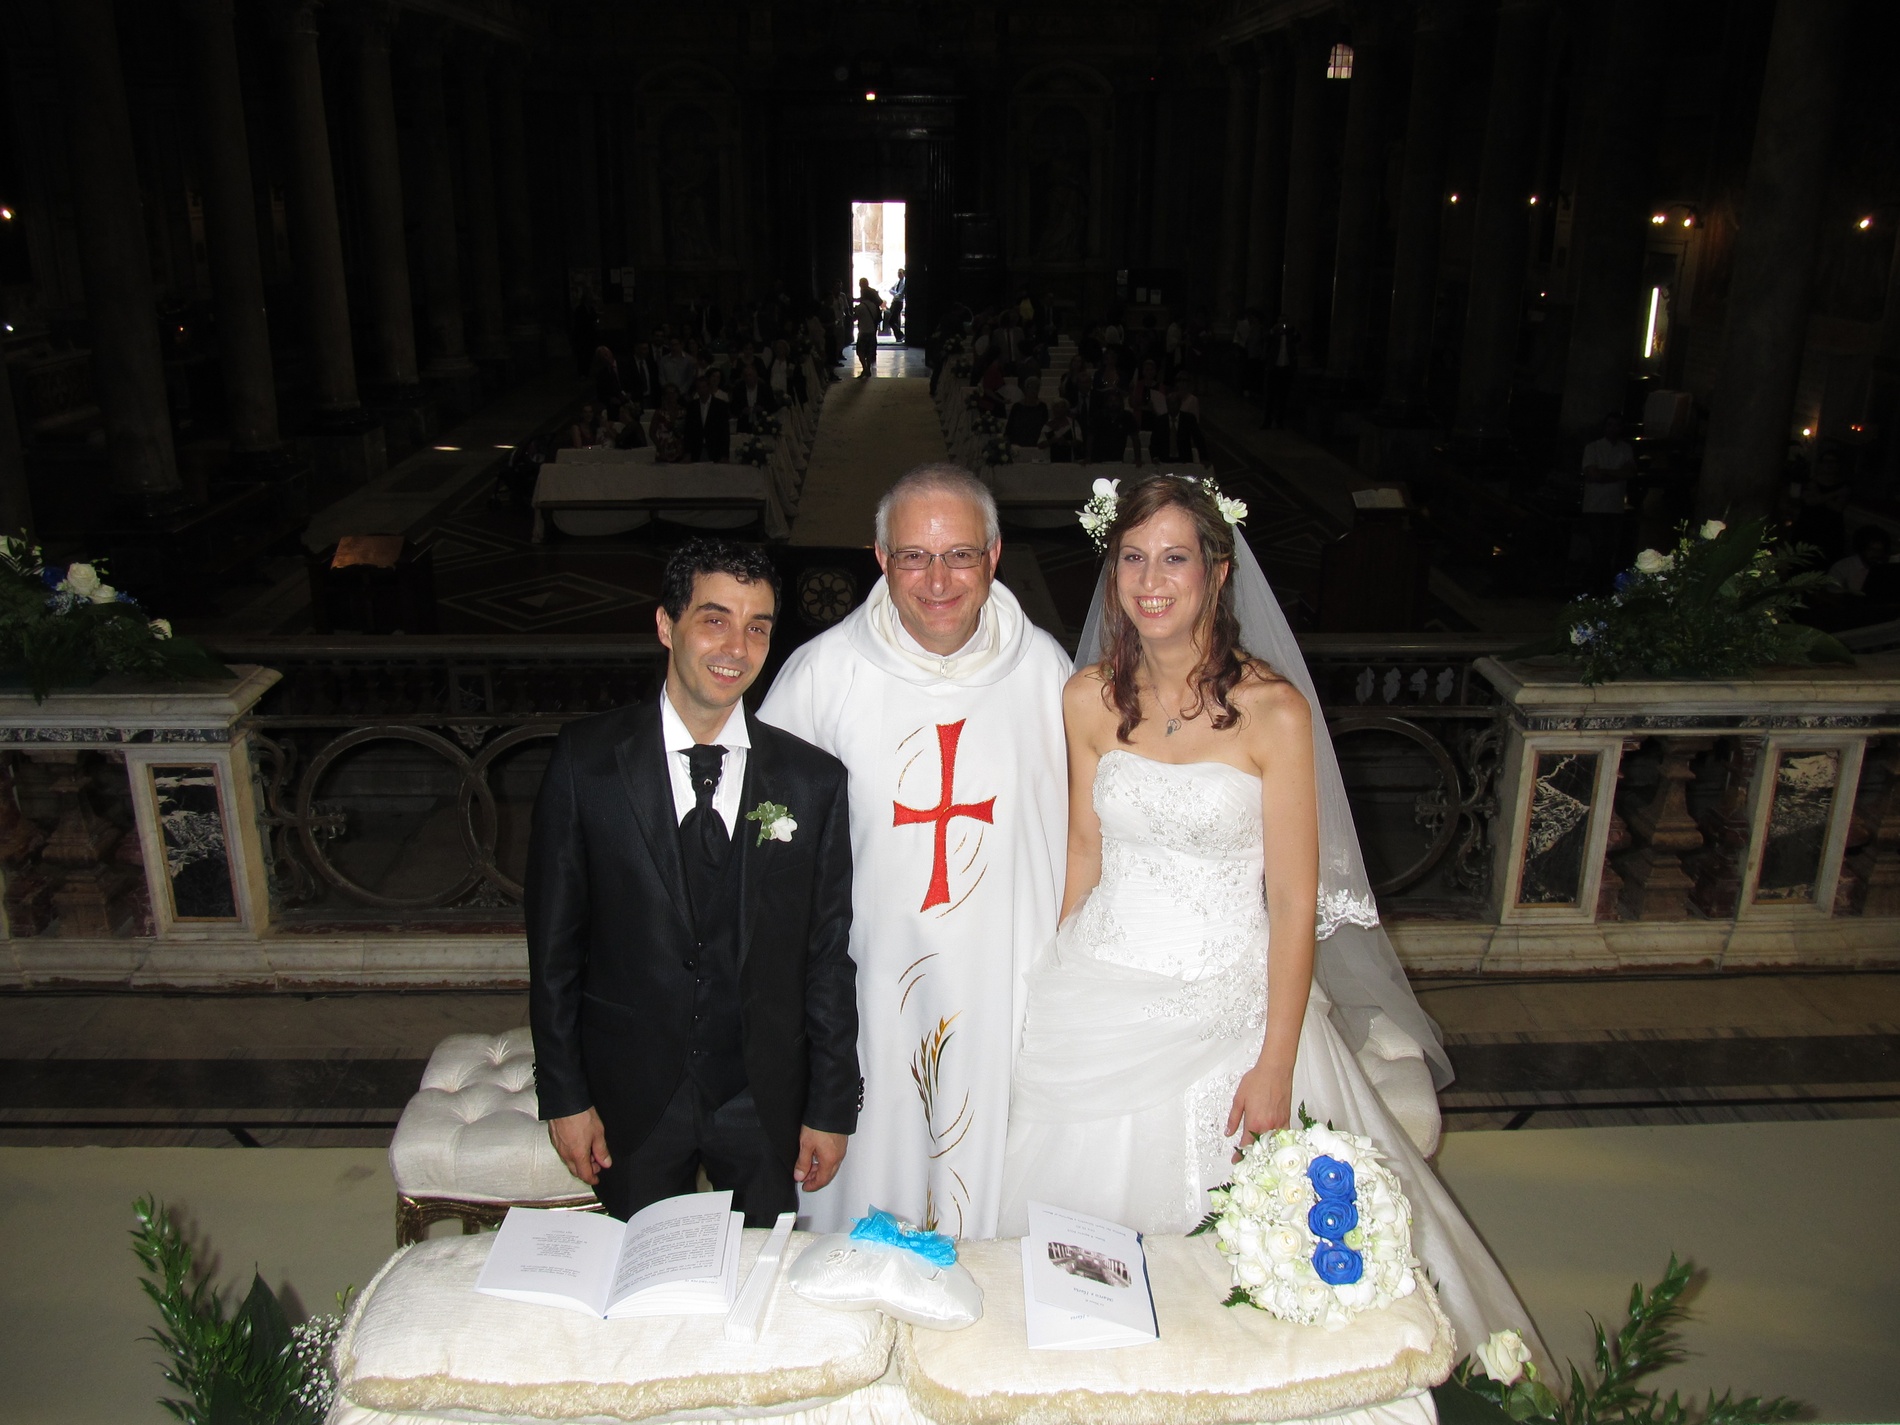 matrimonio-ilaria-torrisi-e-marco-di-lucia-2015-08-08-16-37-11